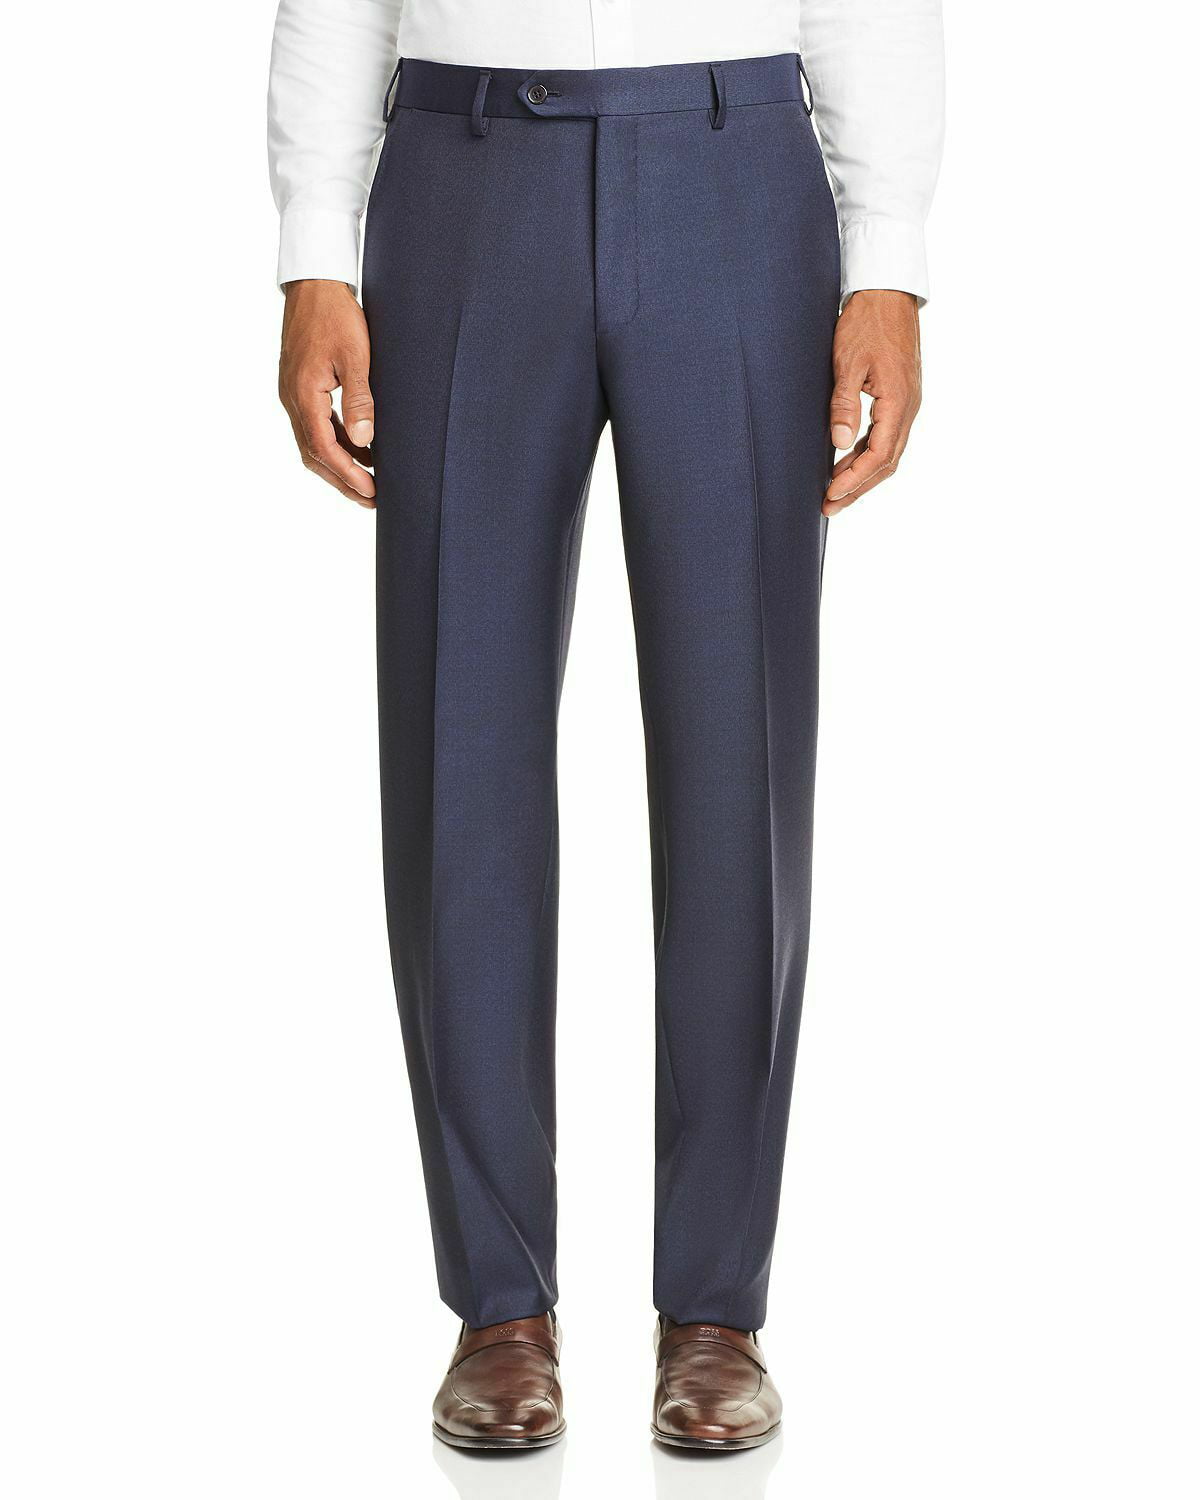 NWT $345 LUIGI BIANCHI Slim-Fit Gray Micro Stripe Wool Dress Pants 34 W 